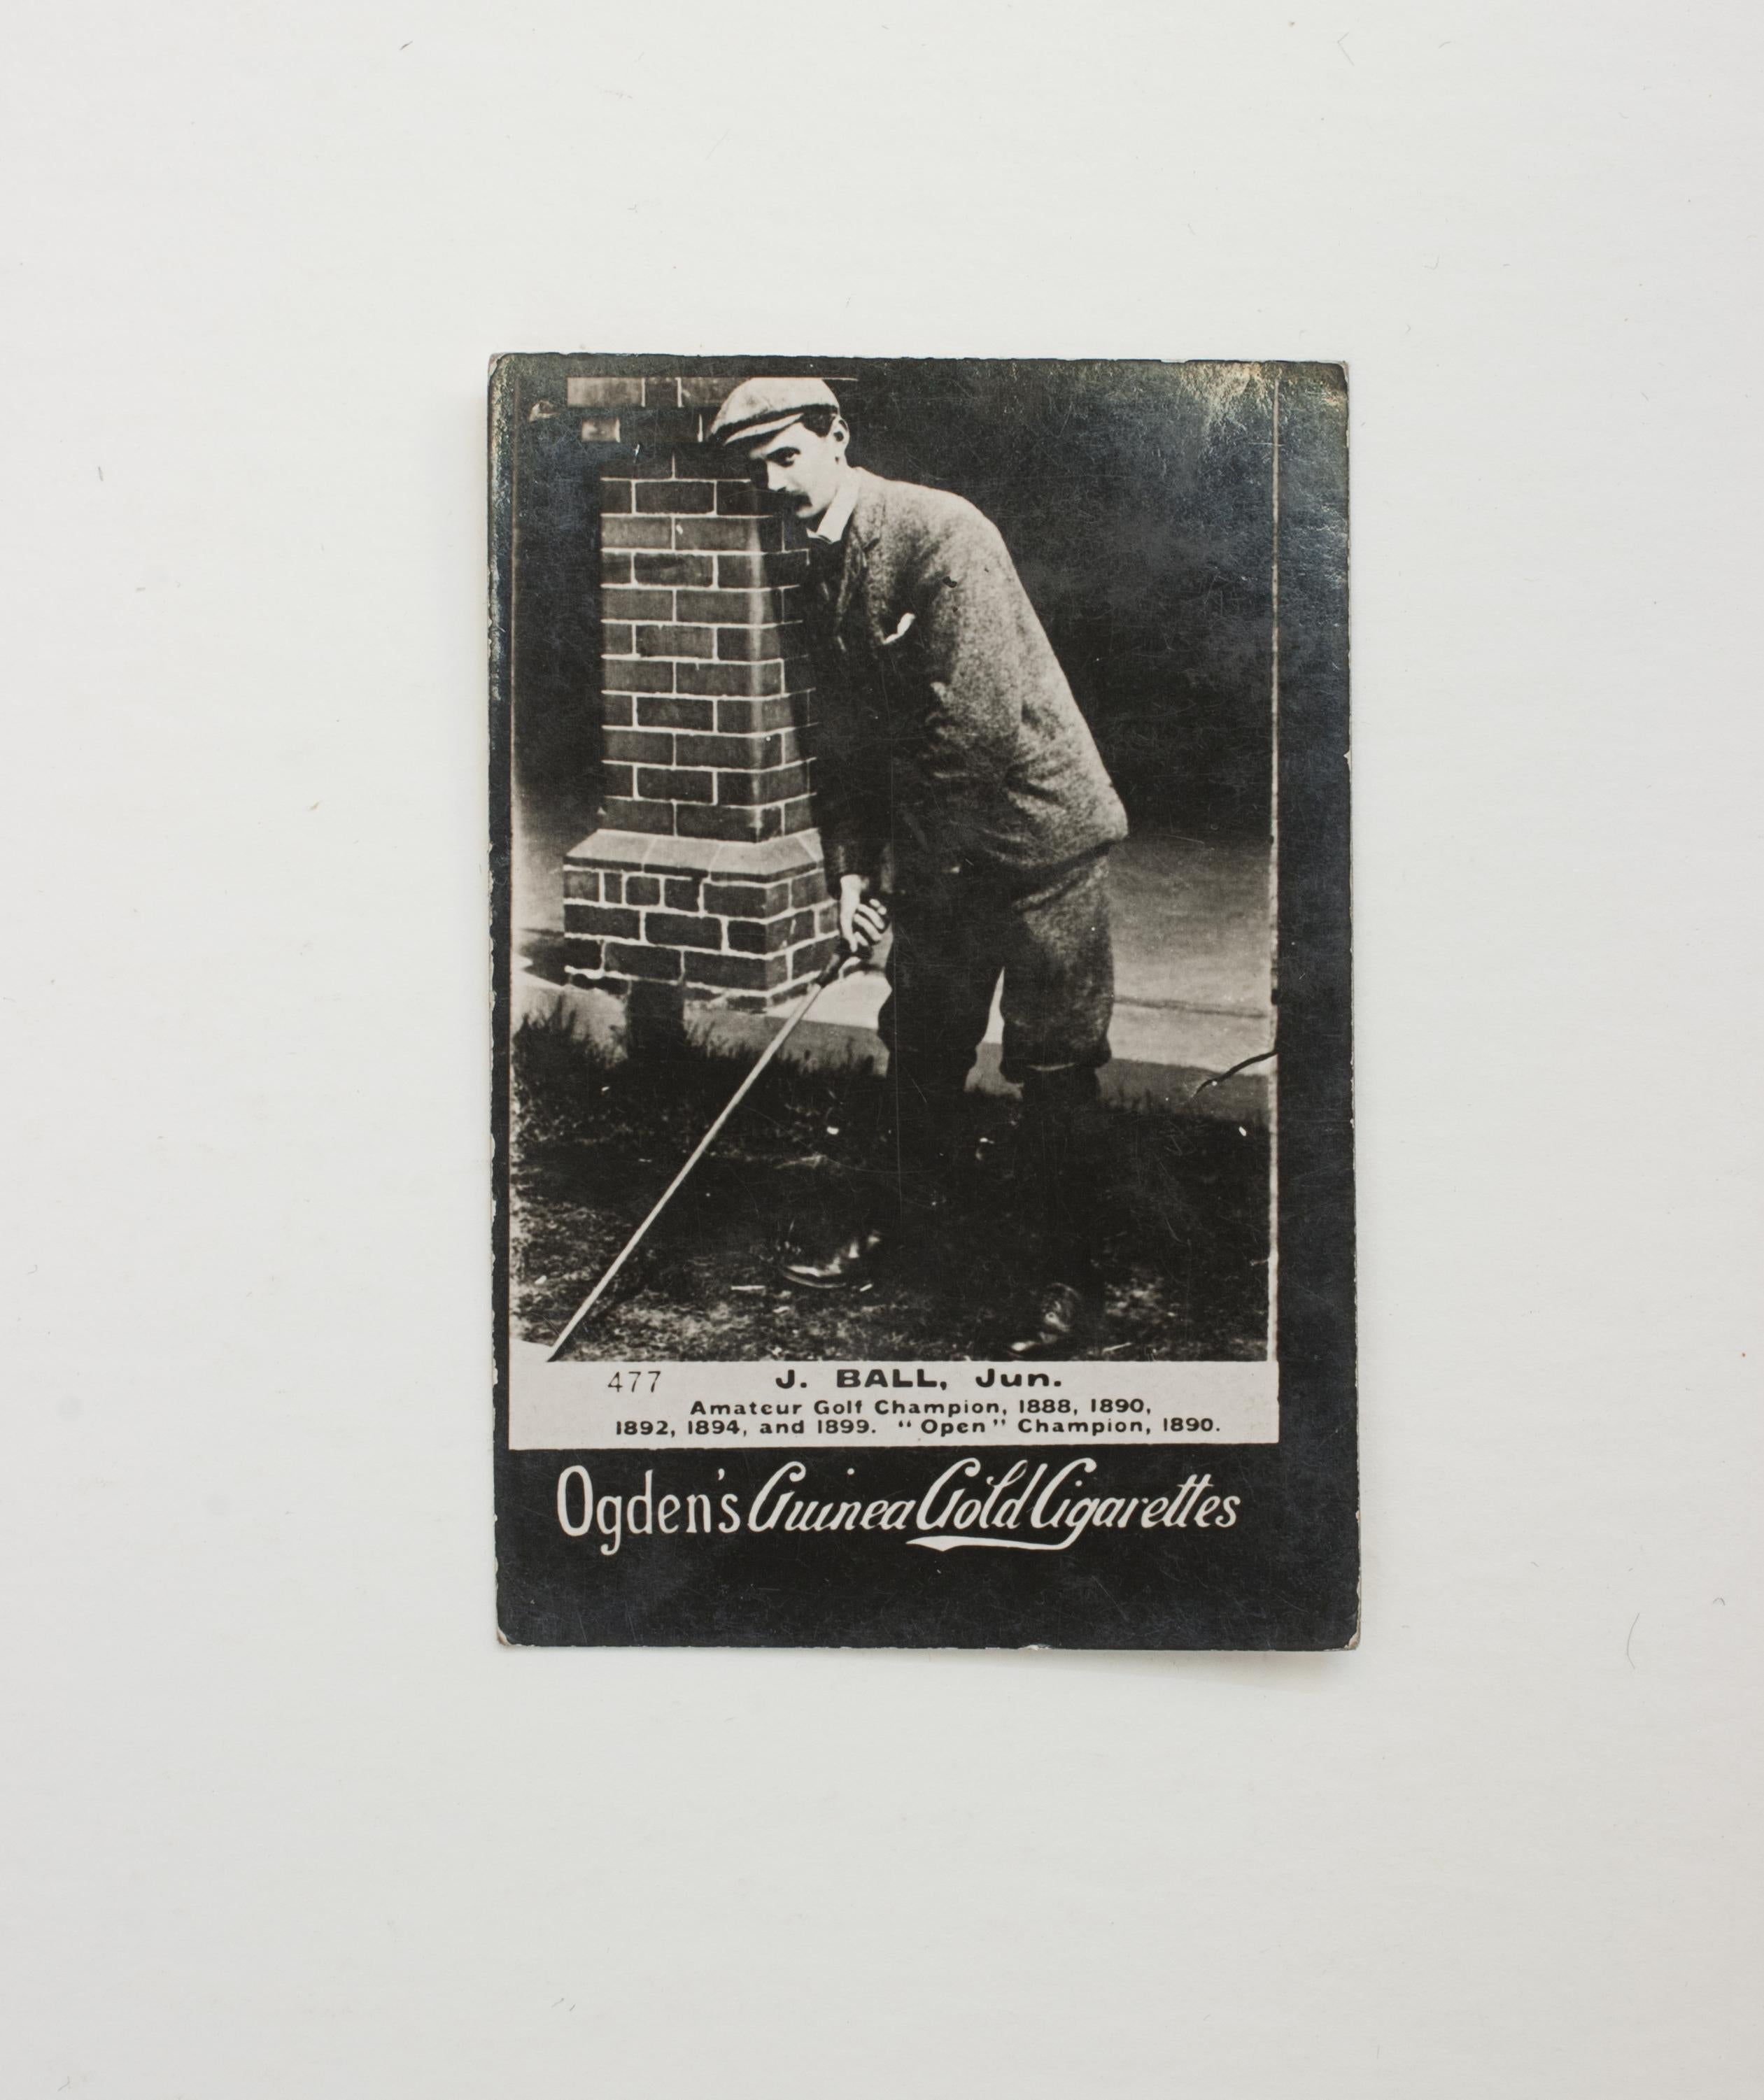 Paper Collection of 14 Ogden's Guinea Gold Cigarette Cards For Sale